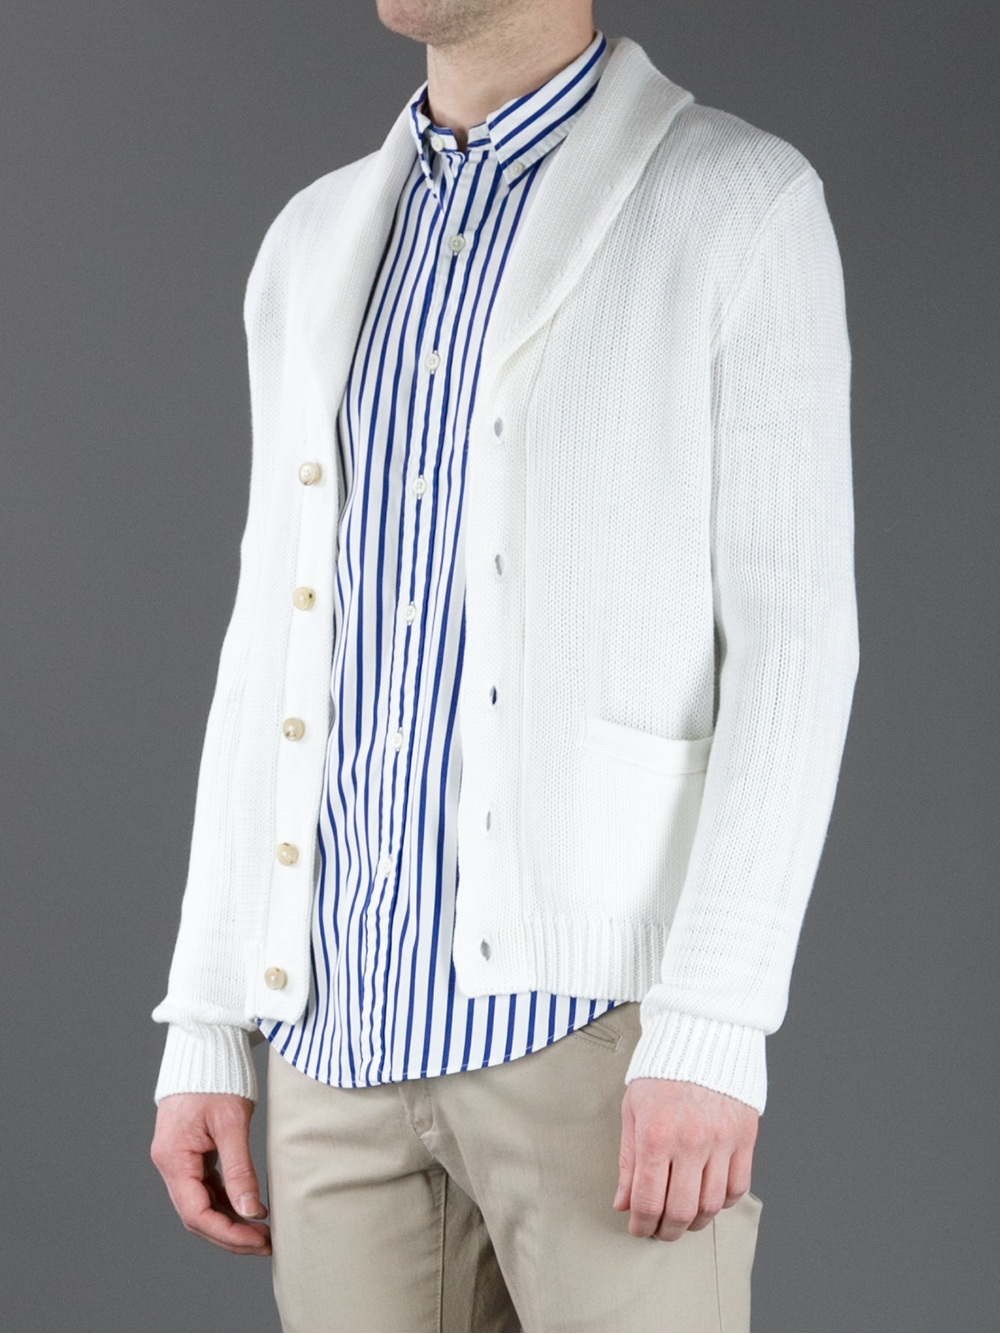 Polo Ralph Lauren Shawl Collar Cardigan in White for Men - Lyst